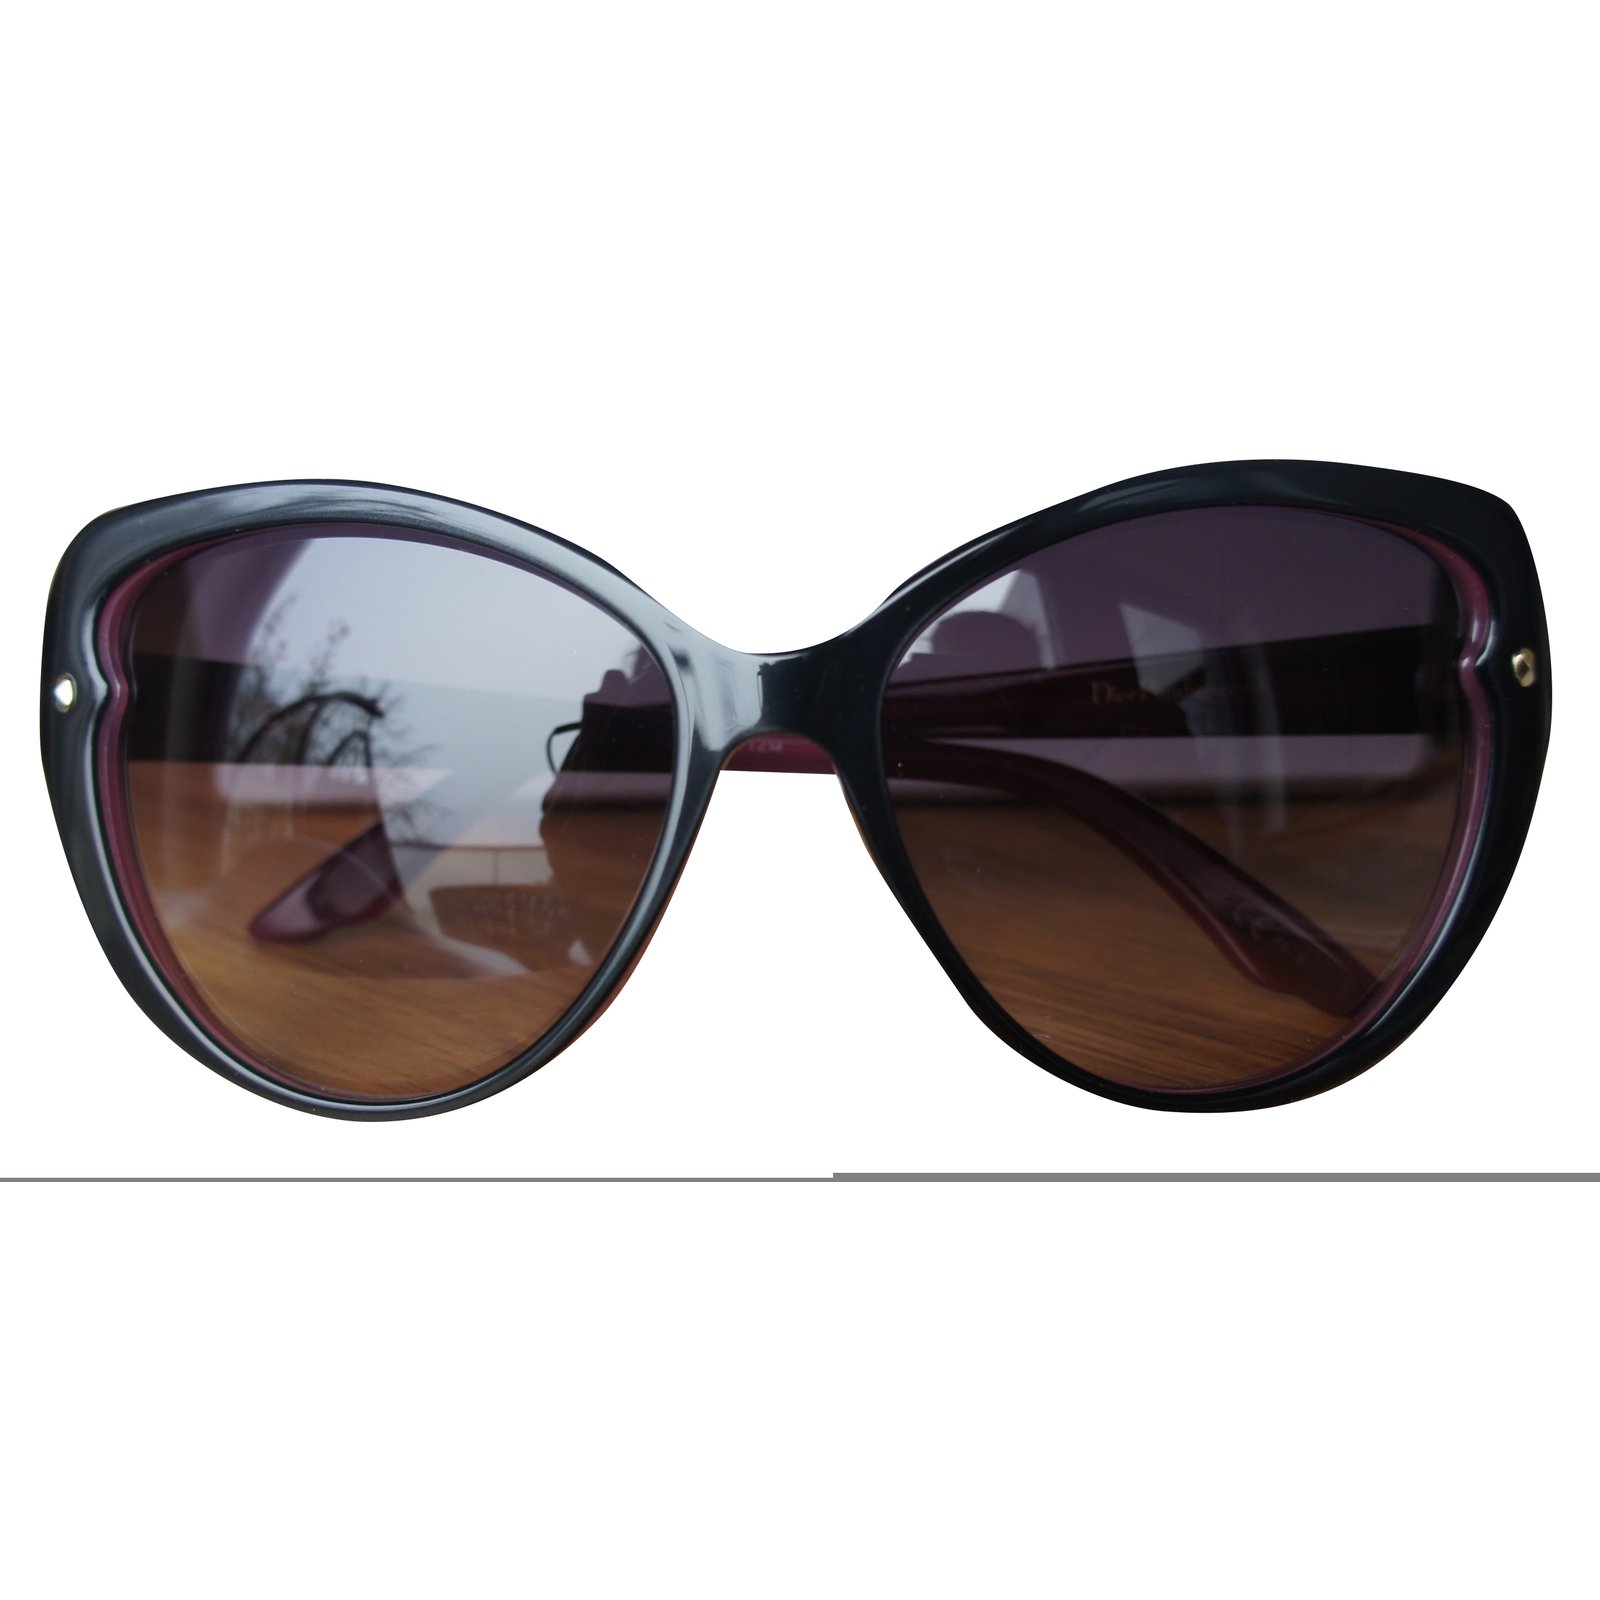 dior purple sunglasses